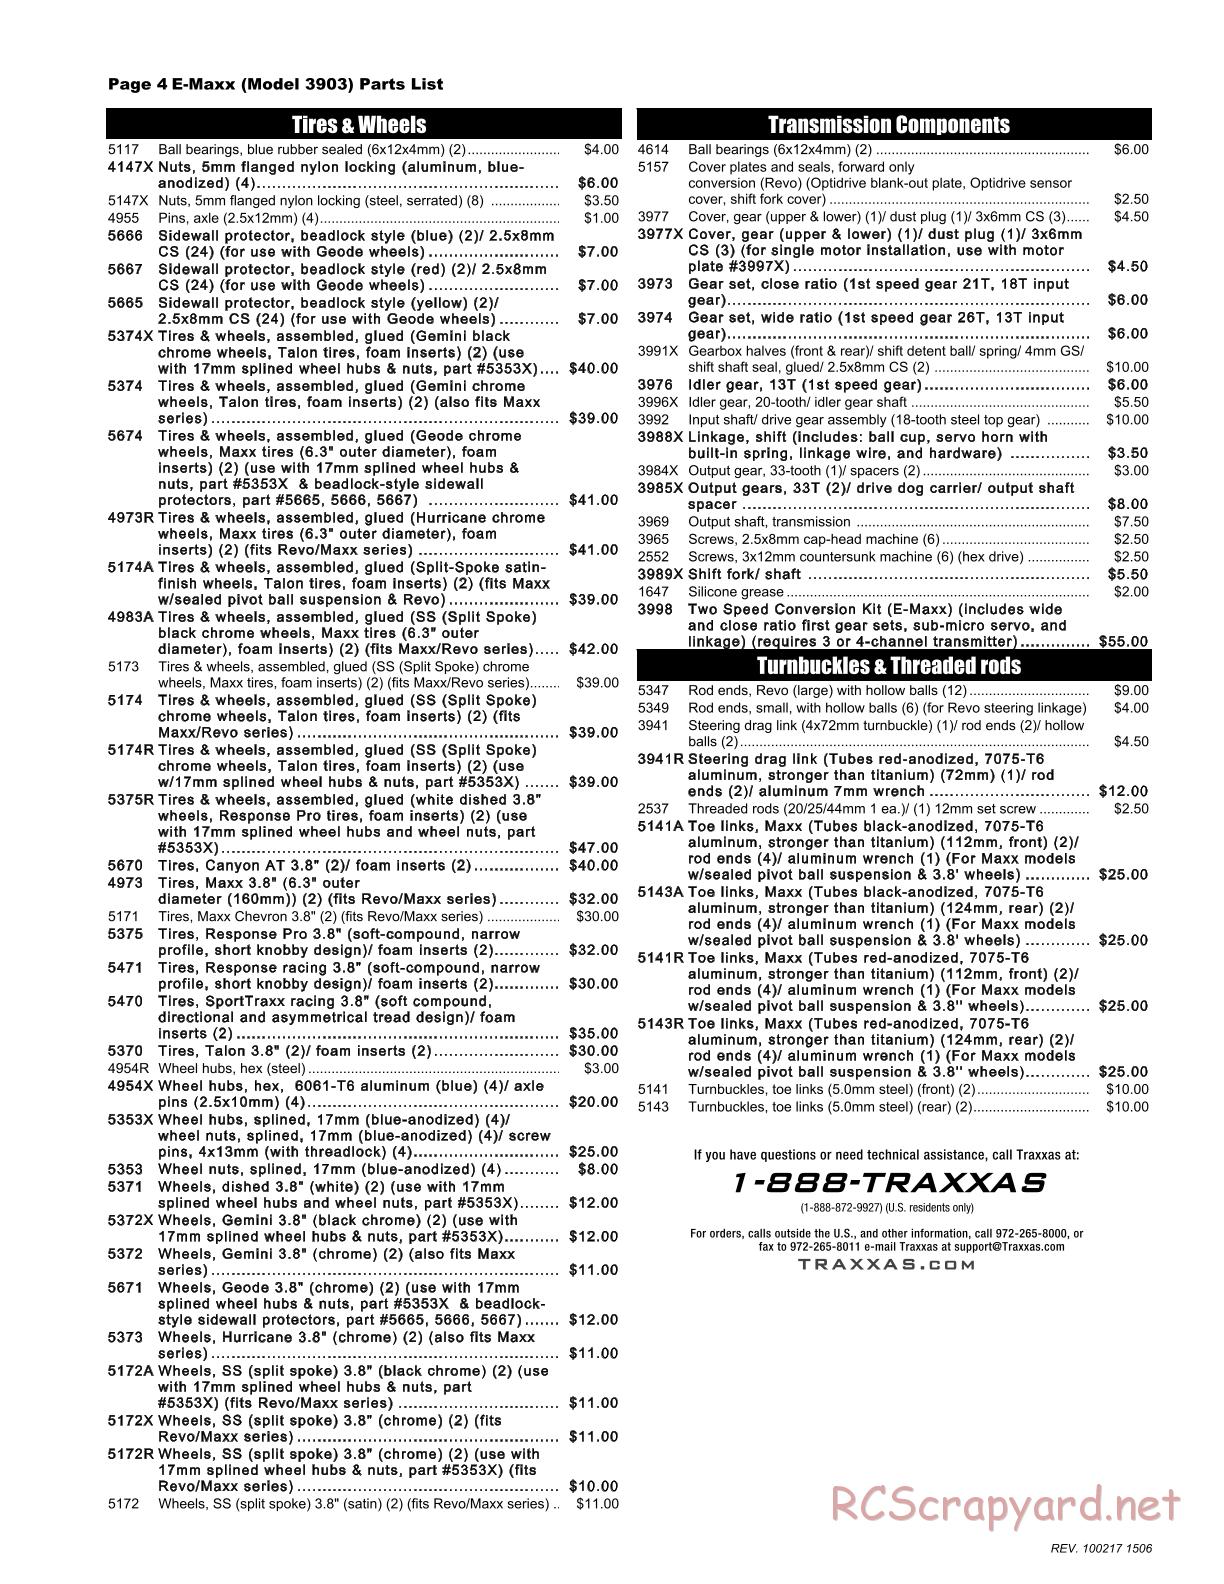 Traxxas - E-Maxx (2010) - Parts List - Page 4